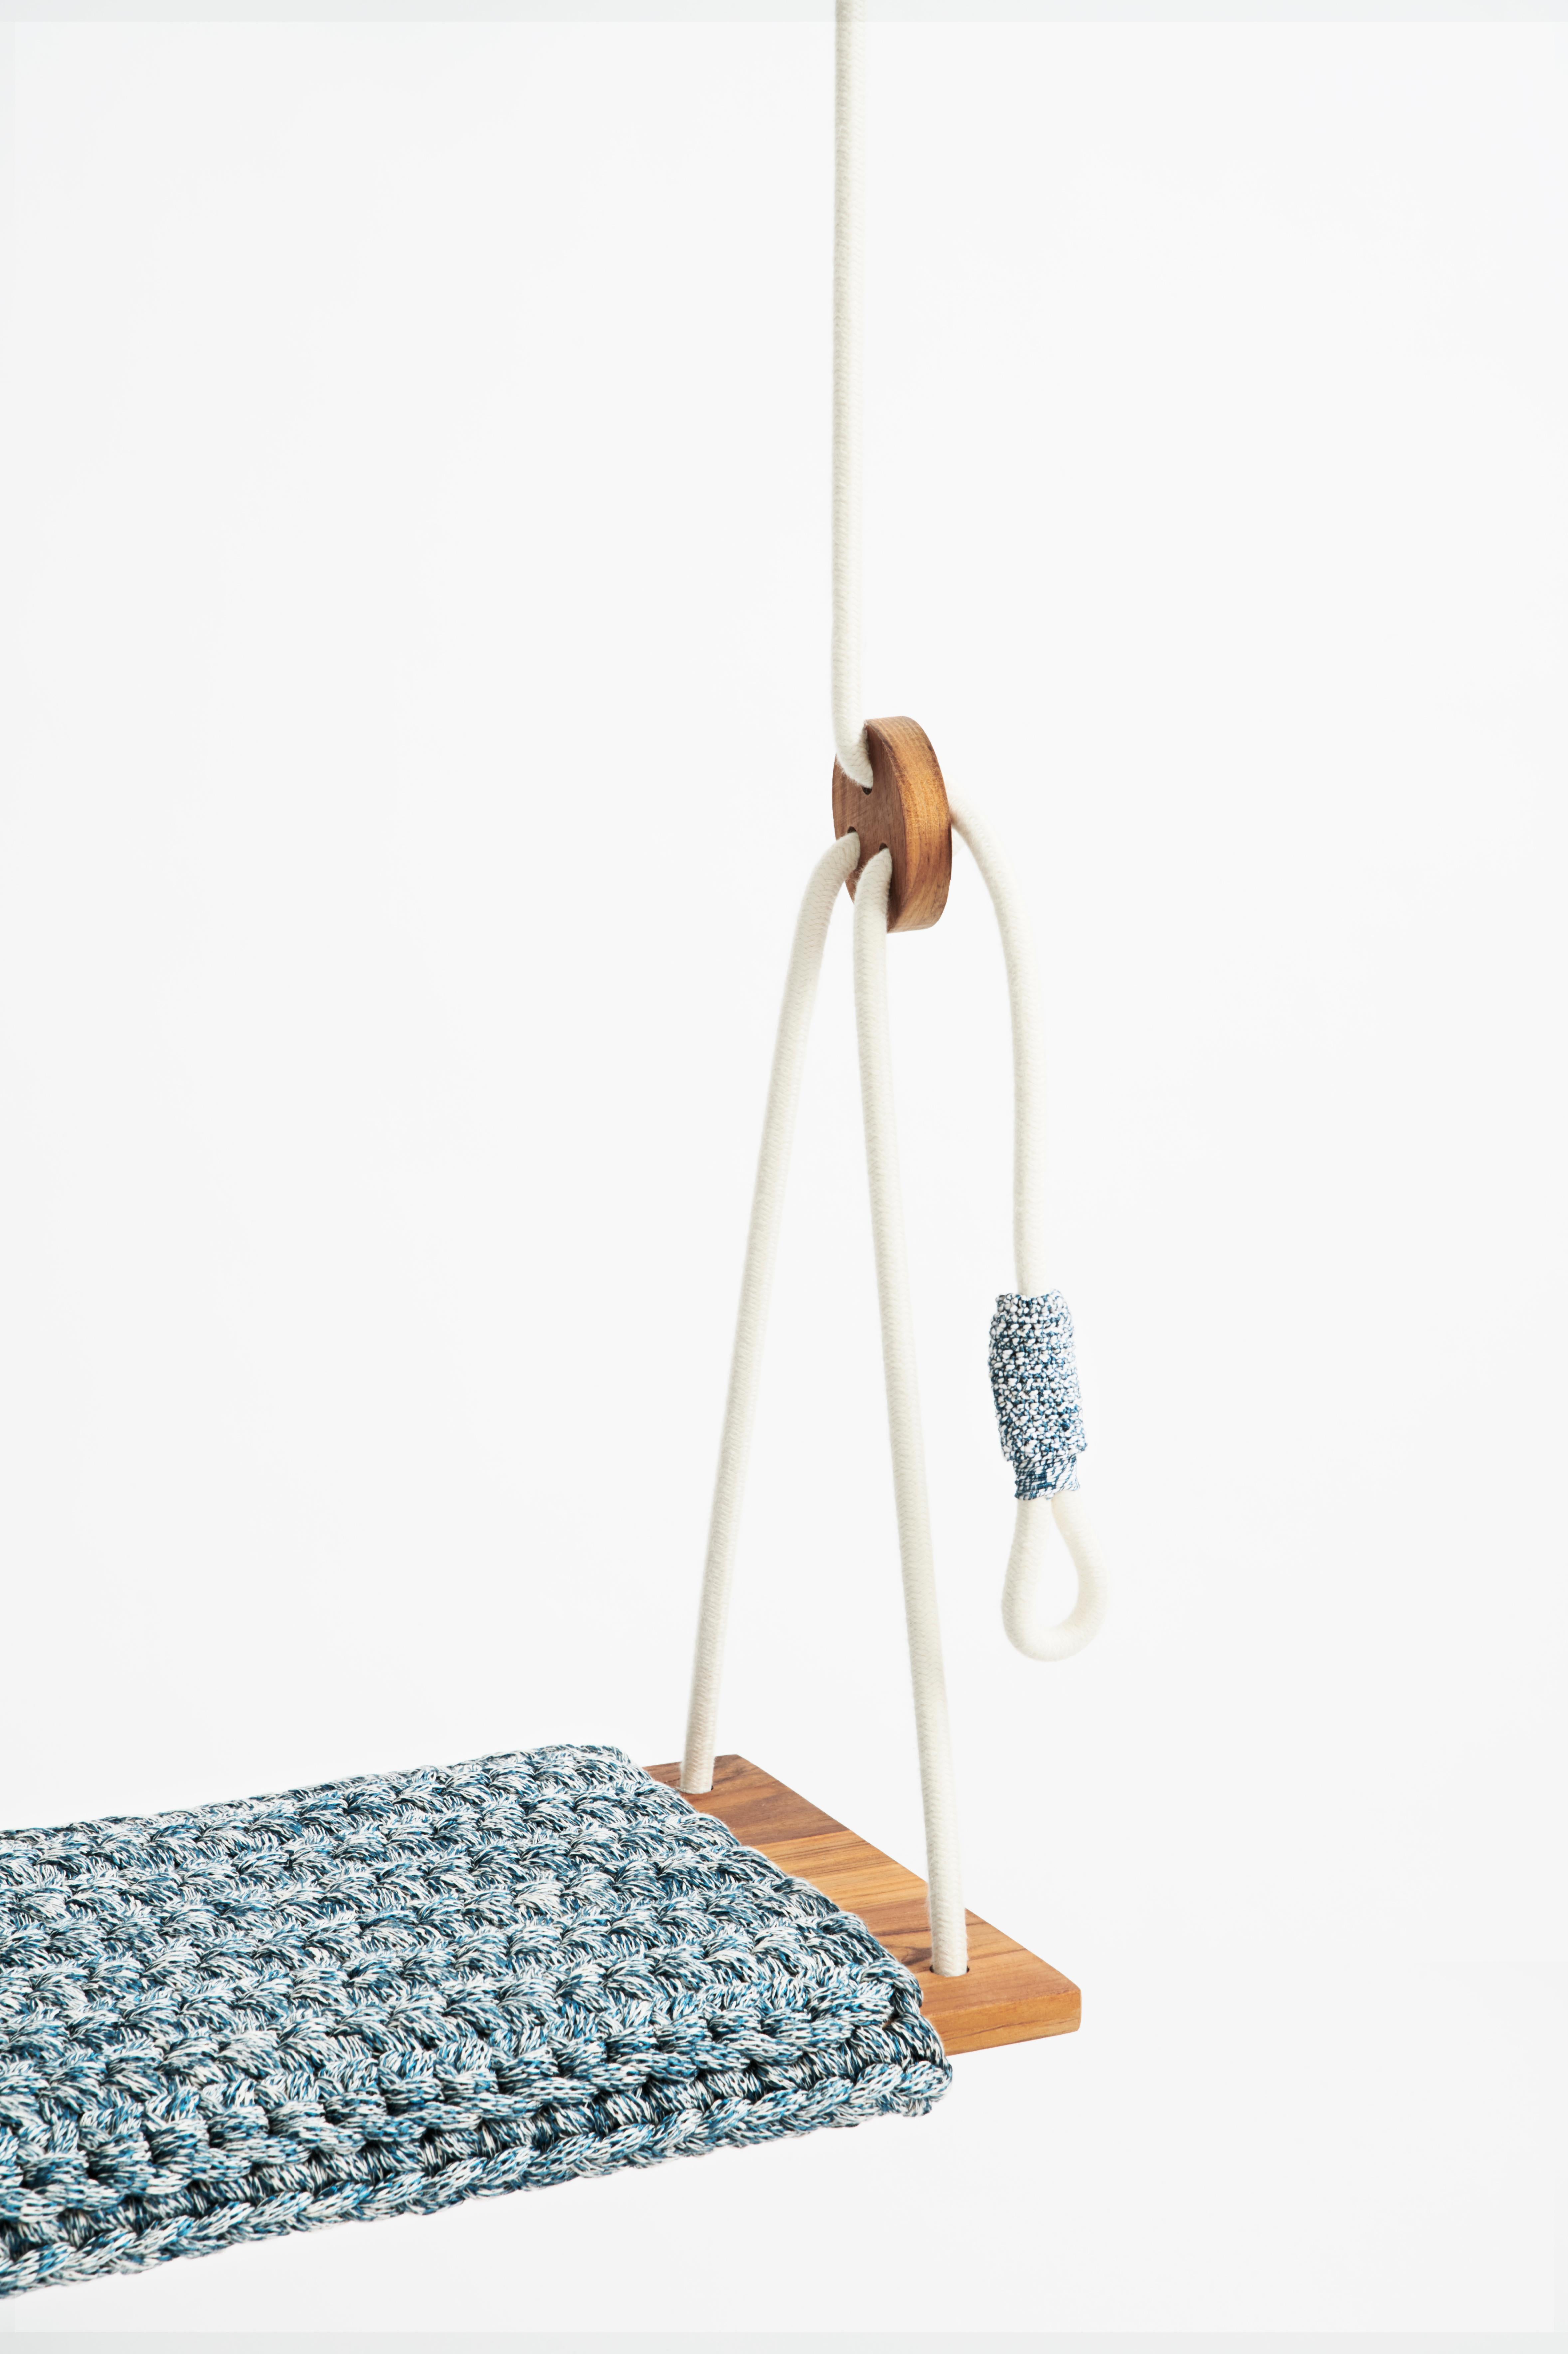 Israeli Luxurious Crochet Rug Swing Handmade in UV Protected Turquoise Yarn, Teak Seat